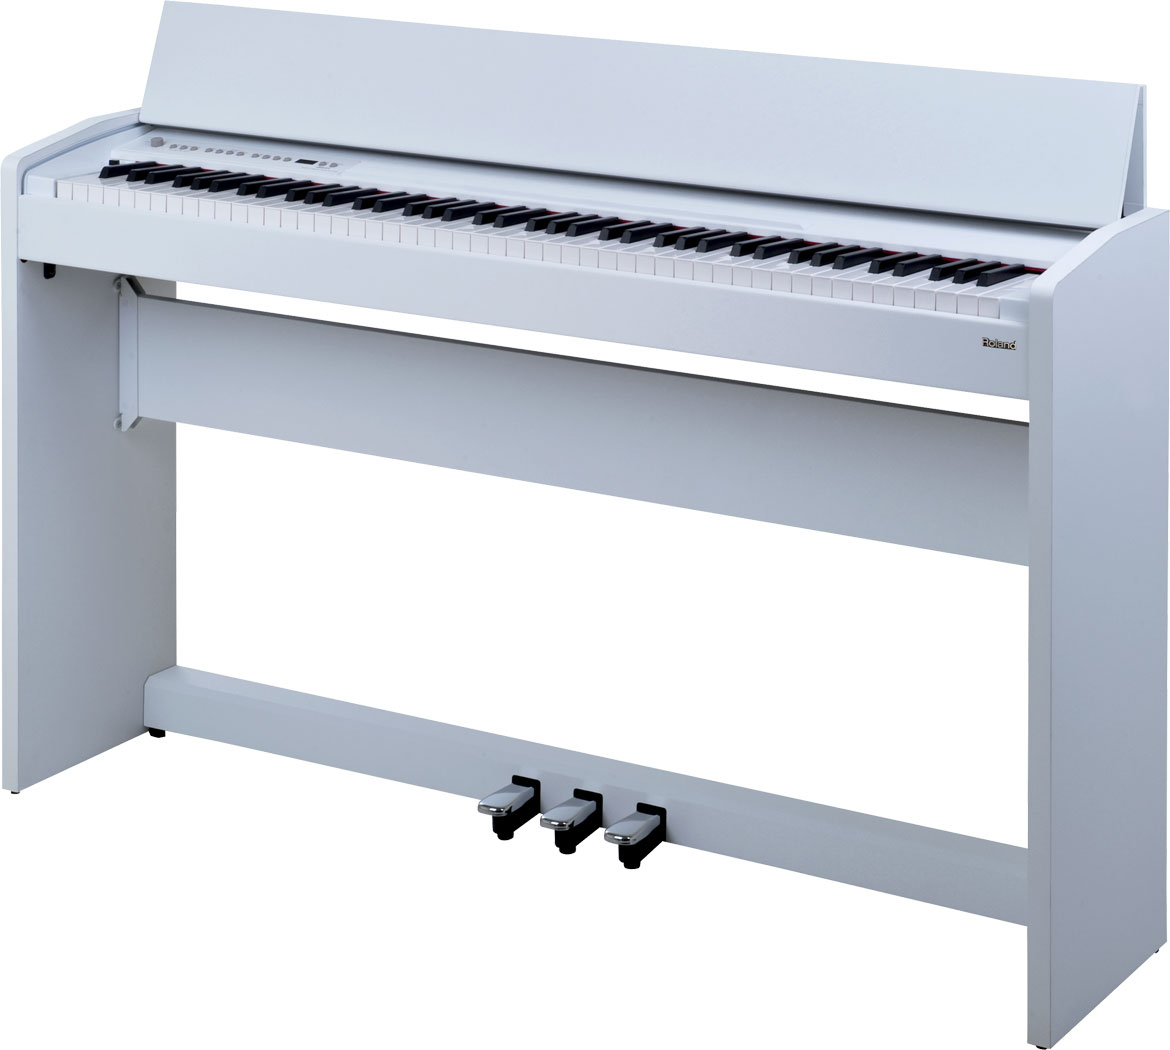 Roland - F-110 | Digital Piano